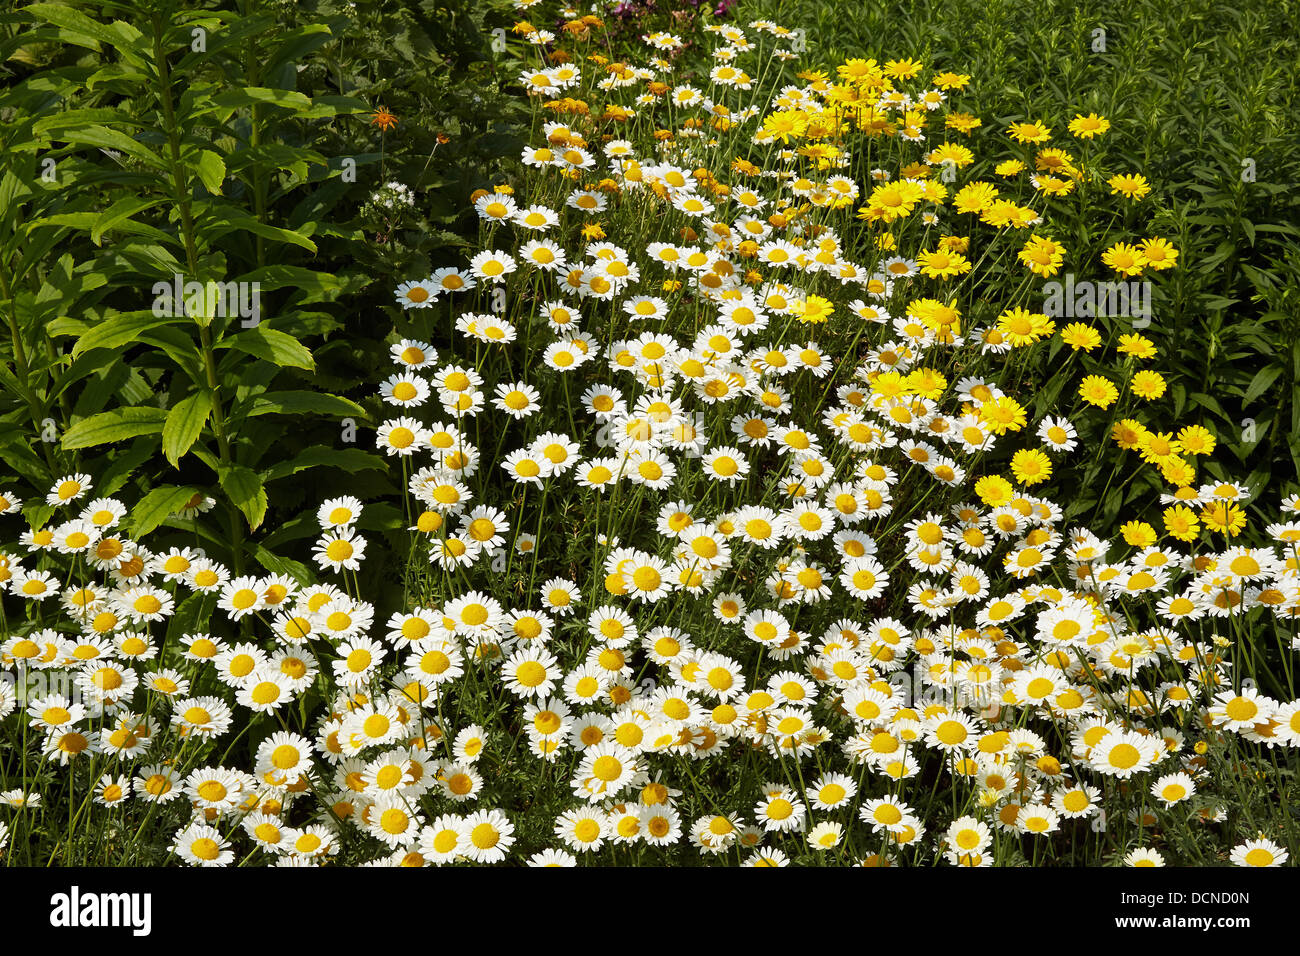 Anthemis tinctoria 'Sauce Hollandaise' and yellow Doronicum flowers in a herbaceous garden border UK Stock Photo